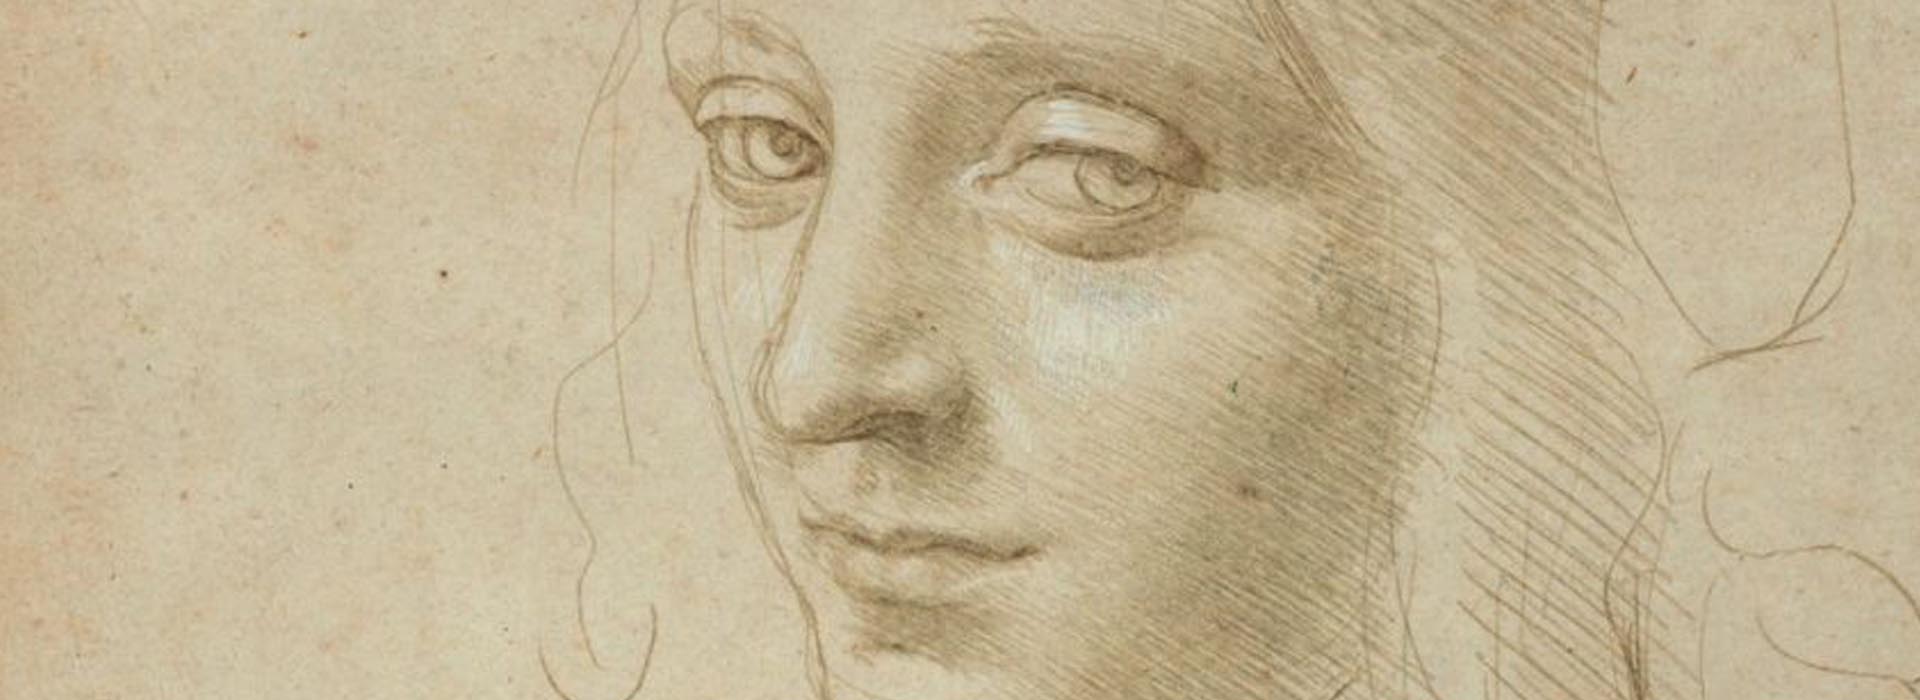 Leonardo Da Vinci: Treasures from the Royal Library of Turin